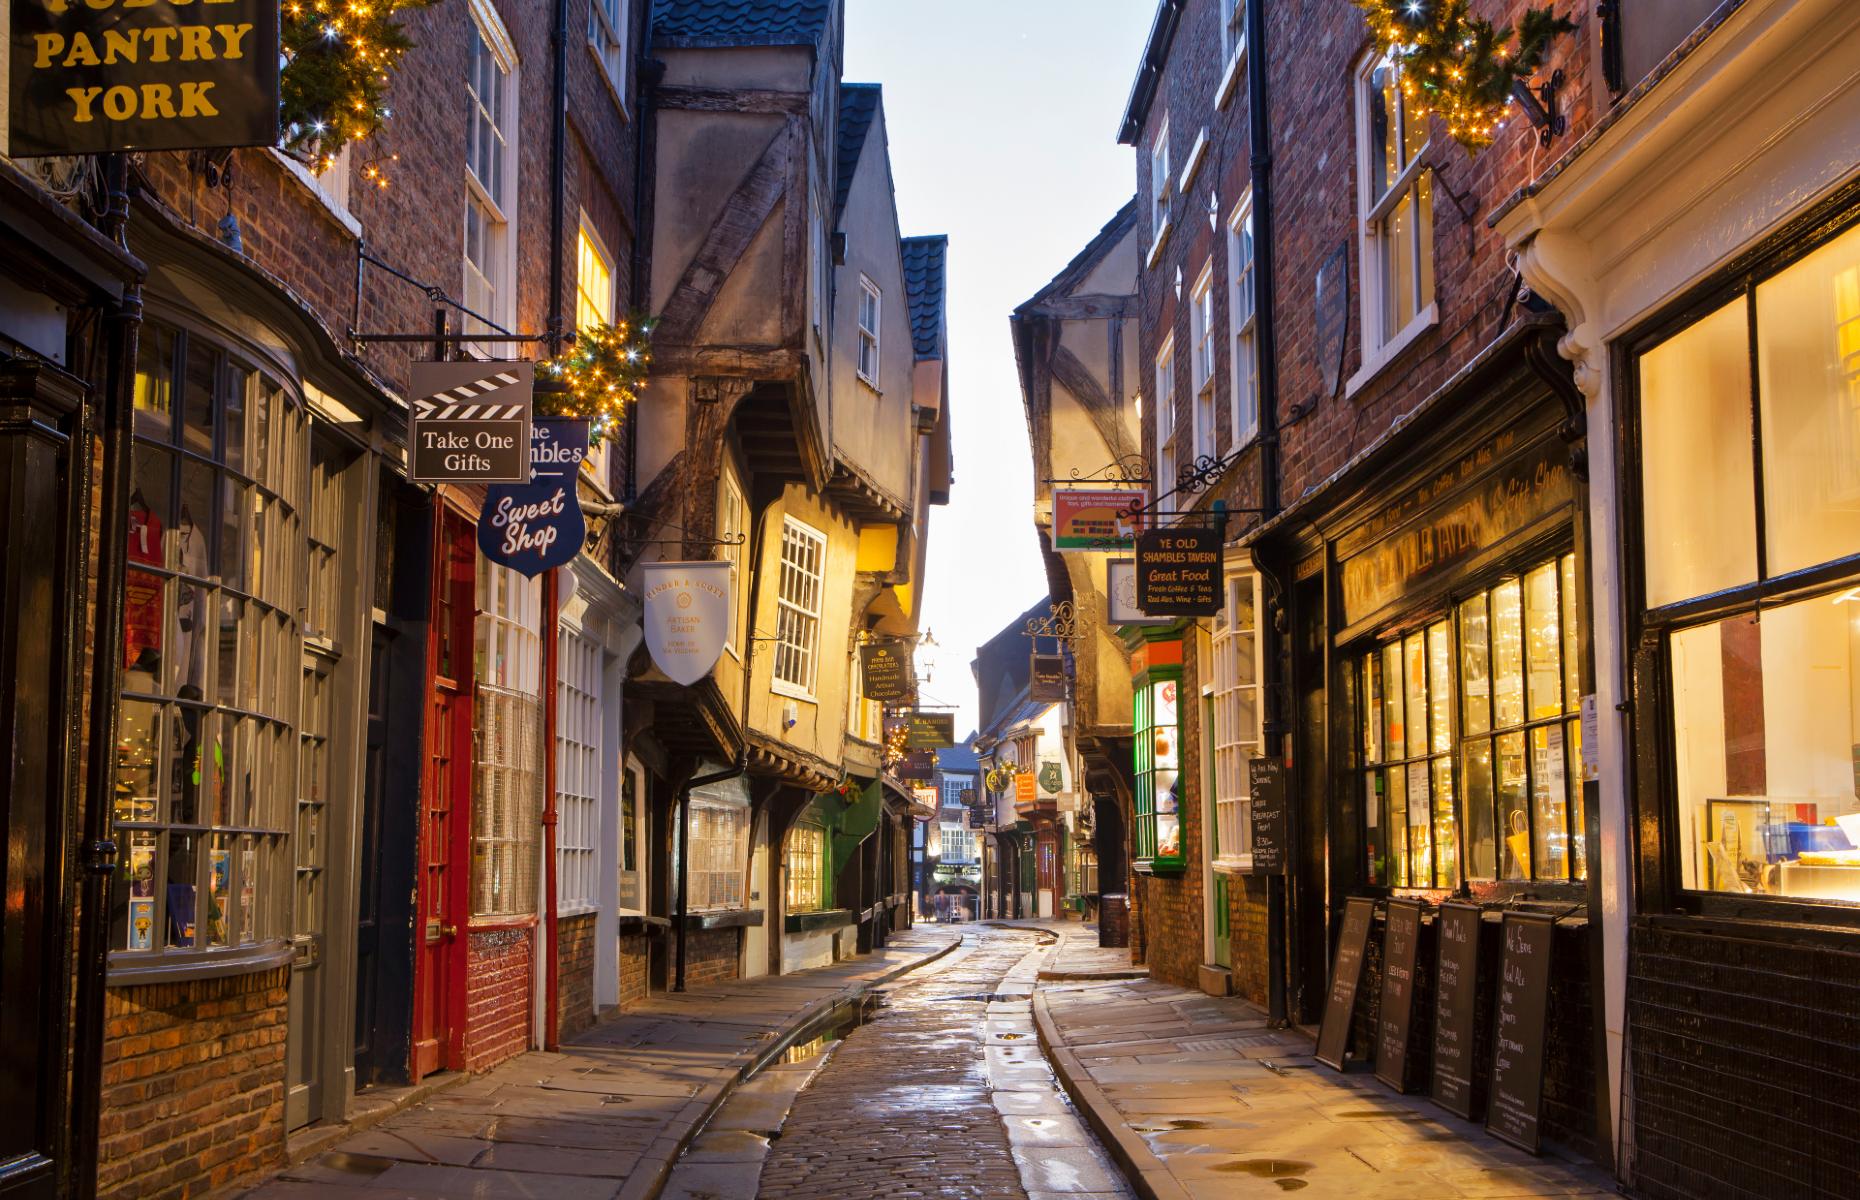 The Shambles, York (Image: Magdanatka/Shutterstock)